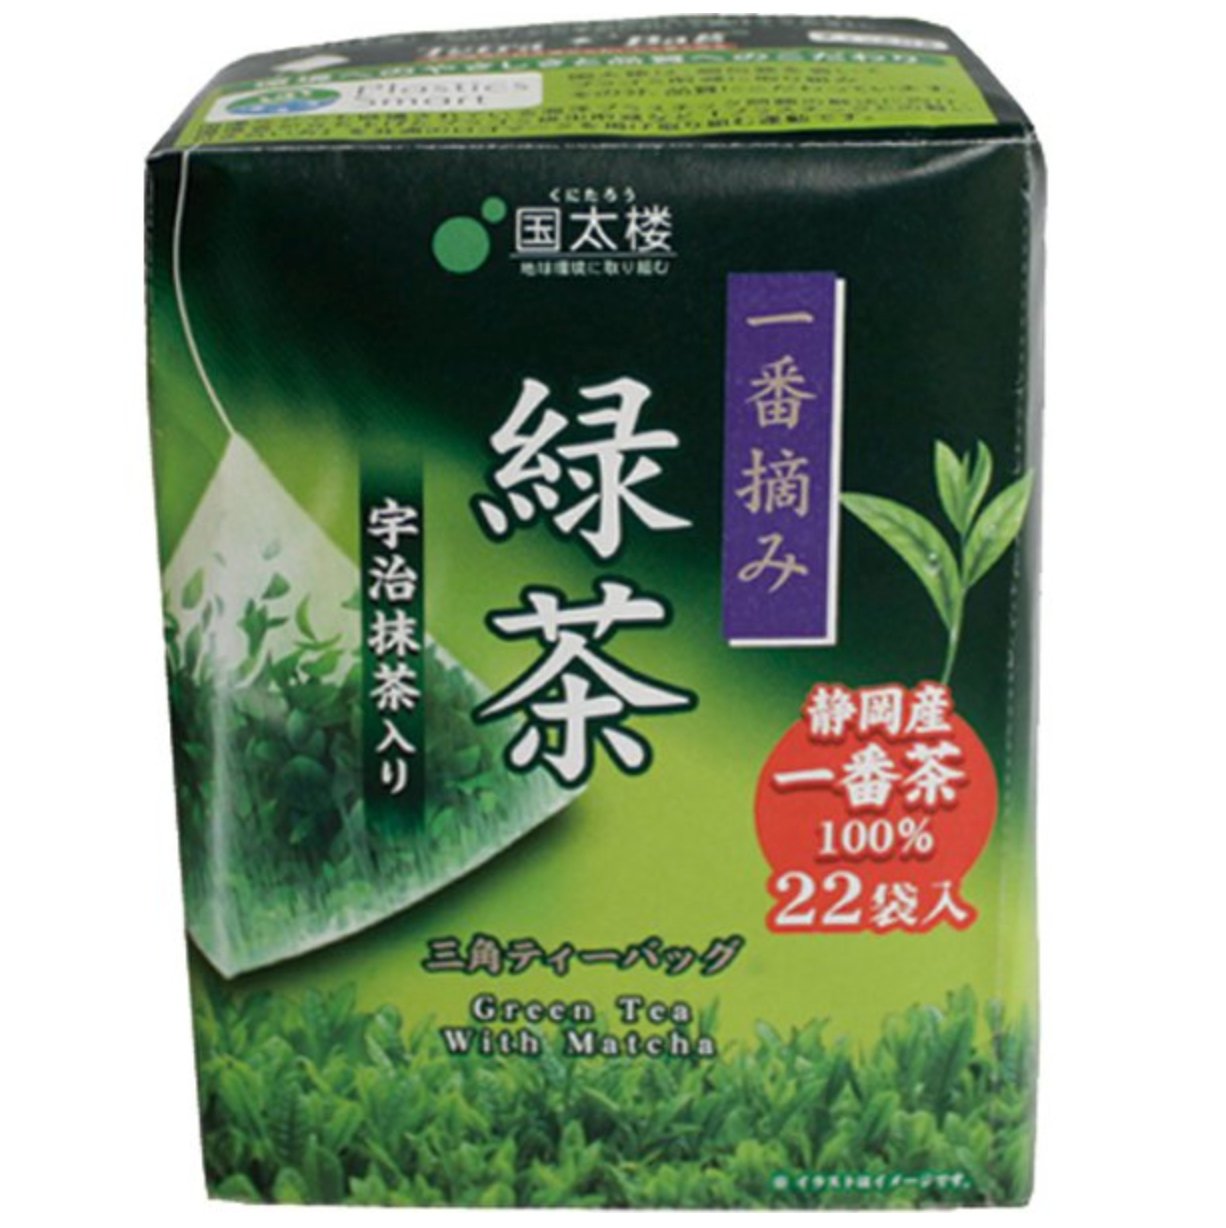 Kunitaro Ichiban picked green tea Uji matcha triangular tea bags 22 packs 39.6g - NihonMura